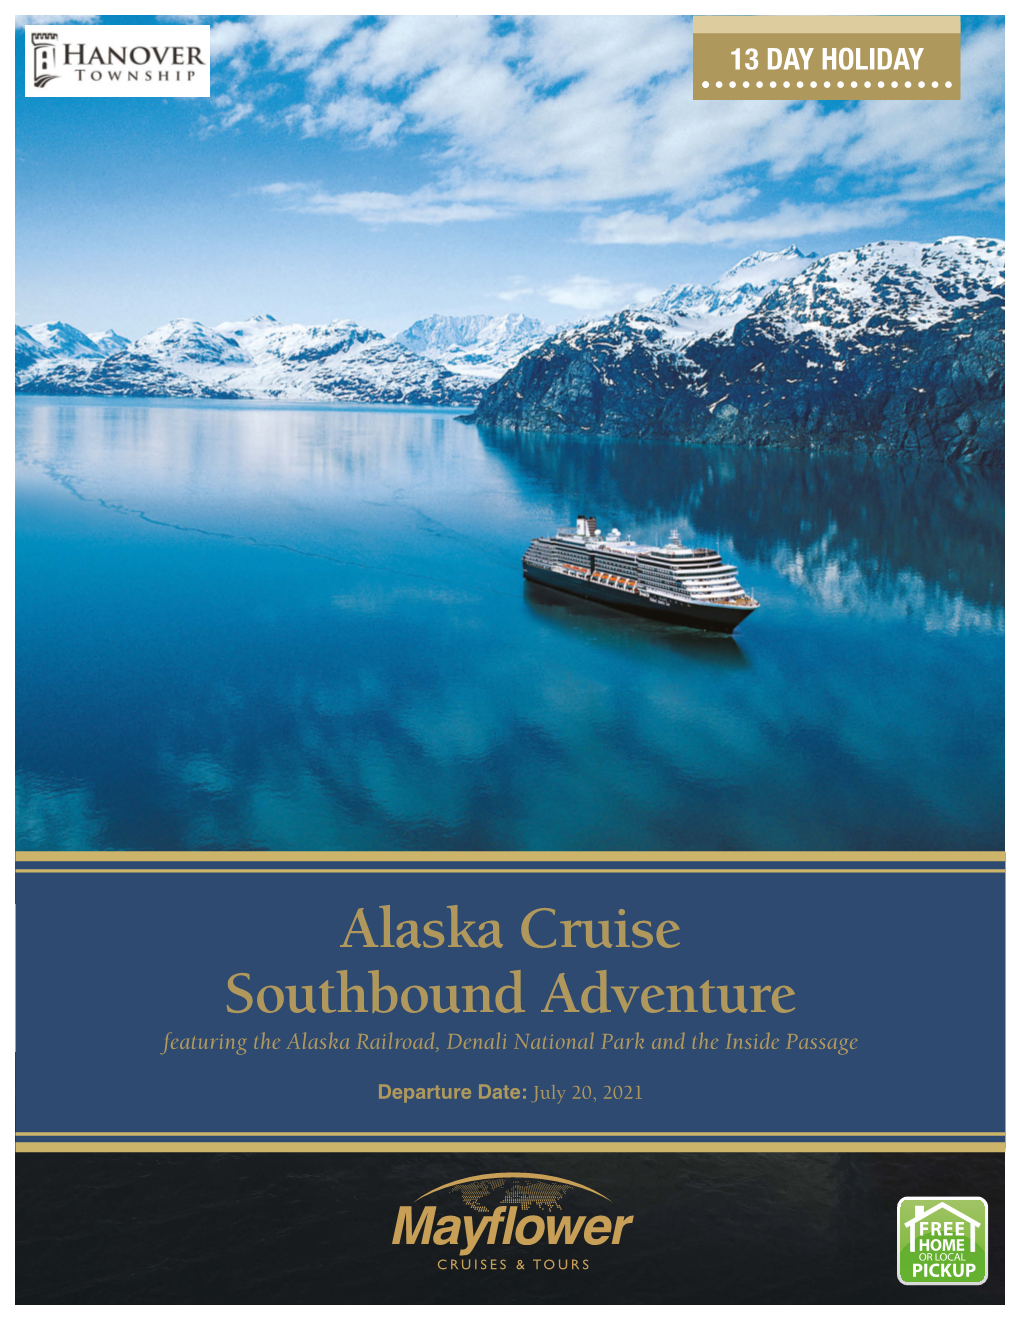 Alaska Cruise Southbound Adventure Featuring the Alaska Railroad, Denali National Park and the Inside Passage